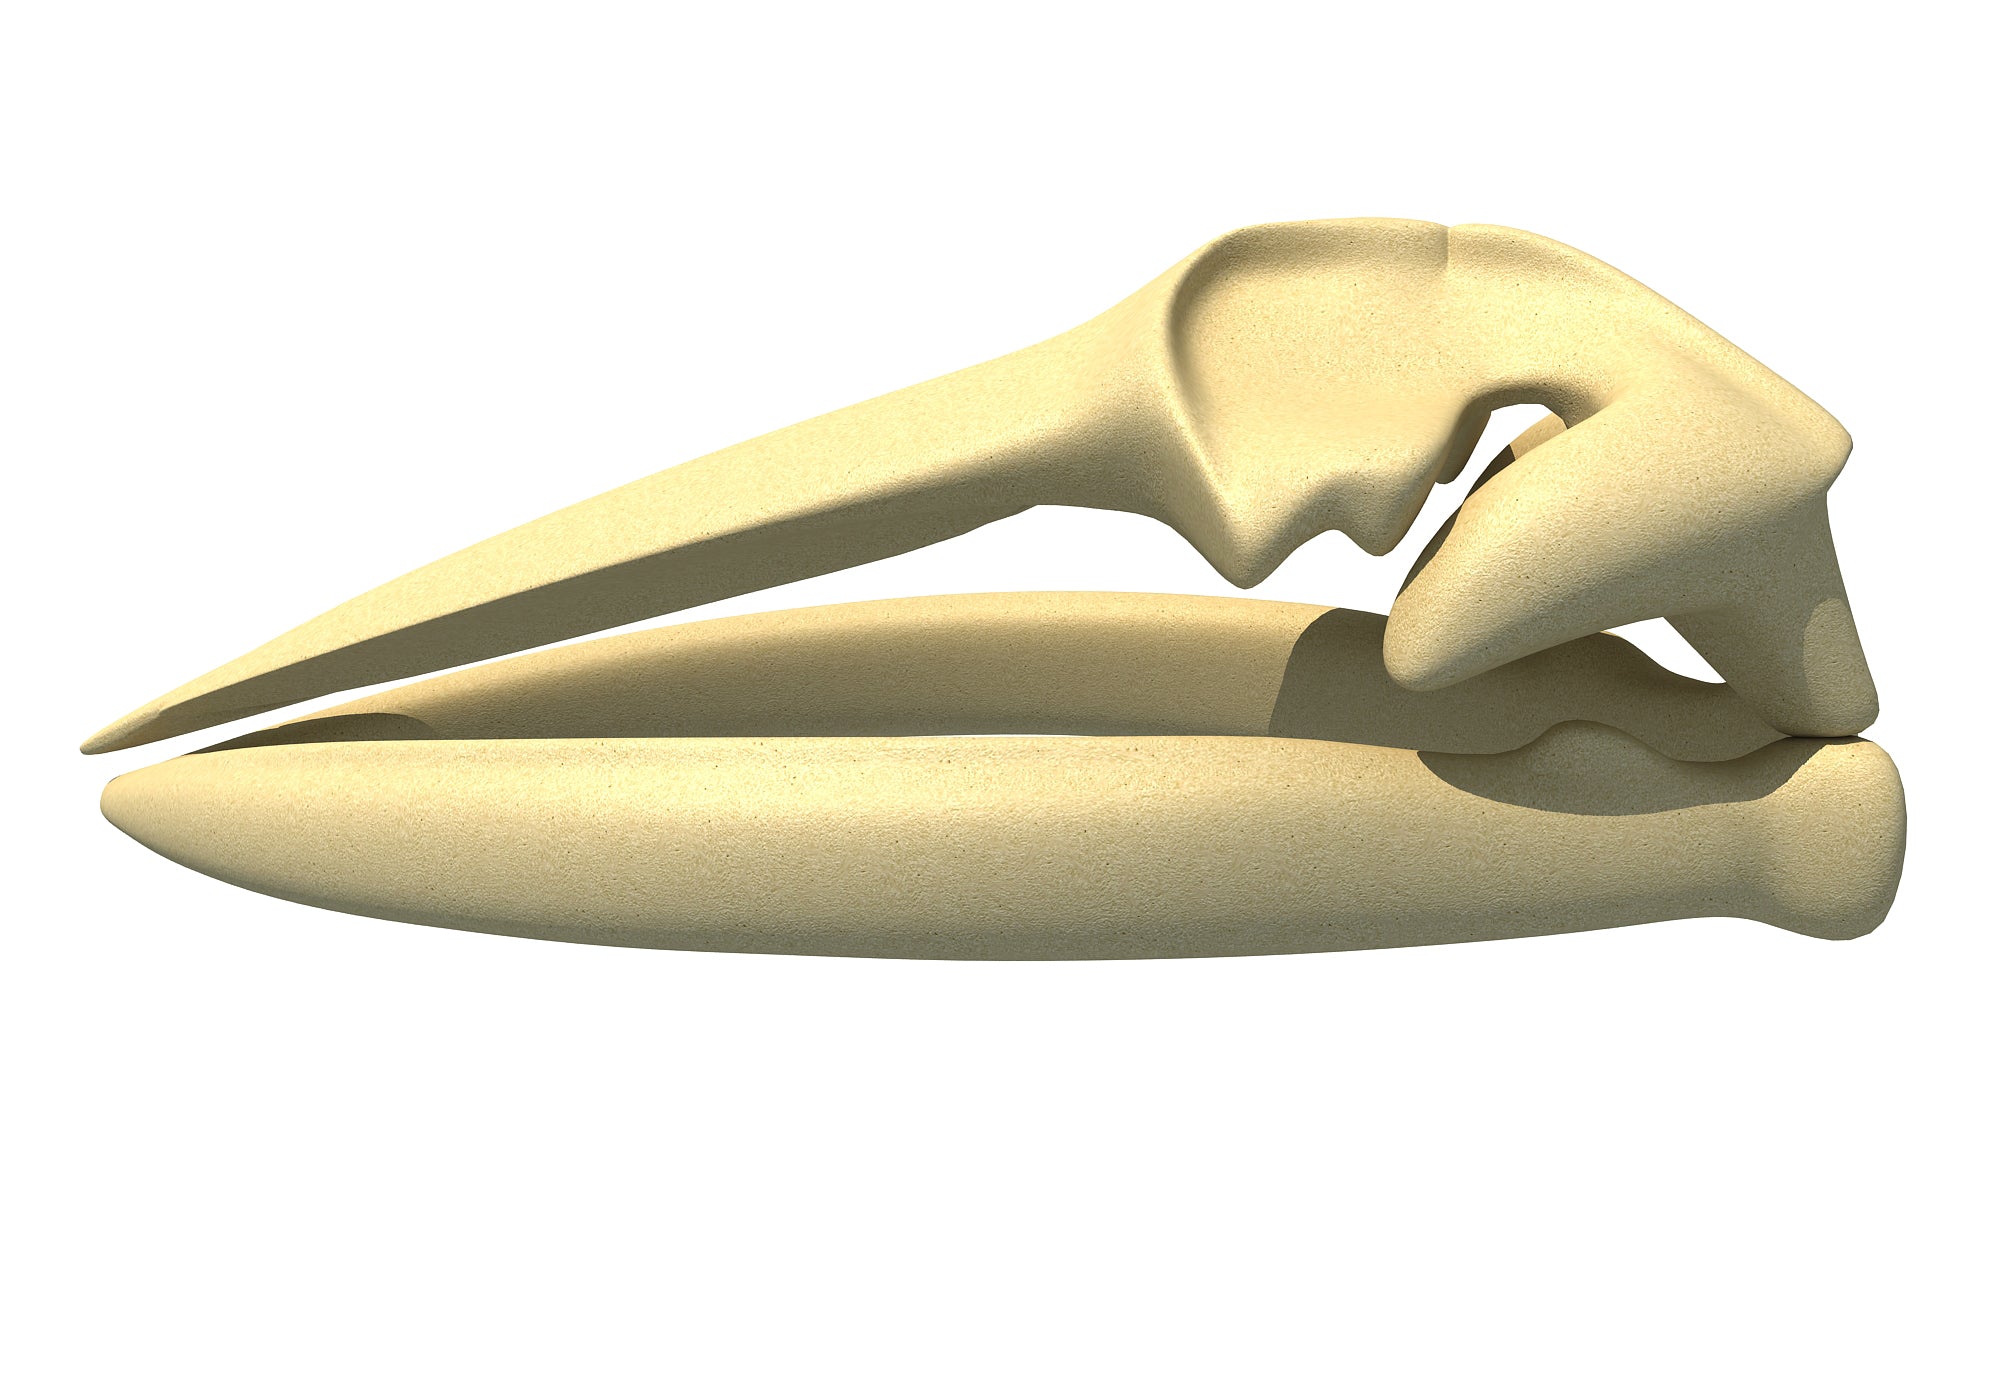 Fin Whale Skull